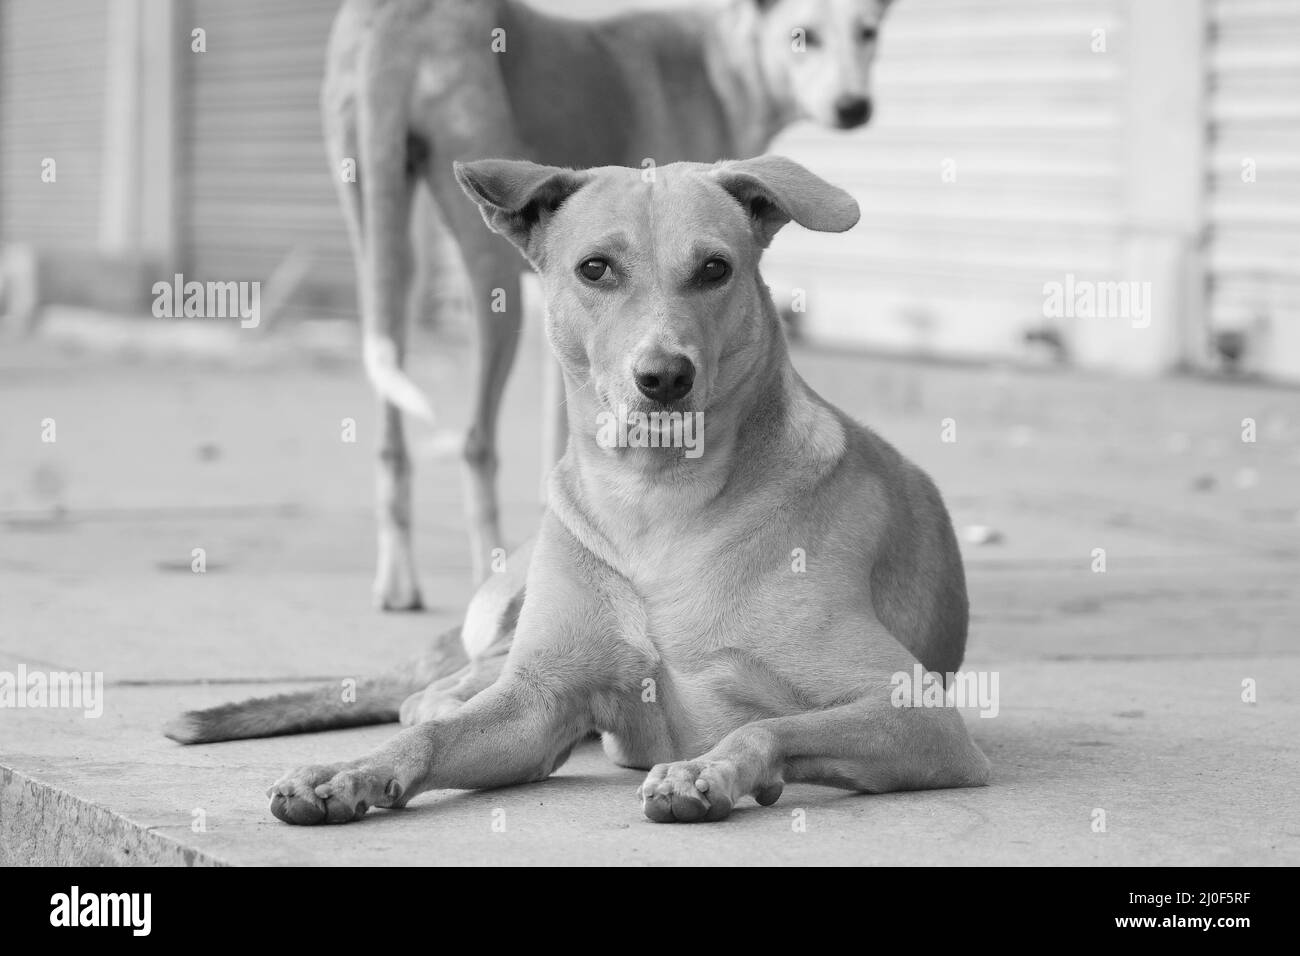 Immagine di cani vaganti in cerca Foto Stock